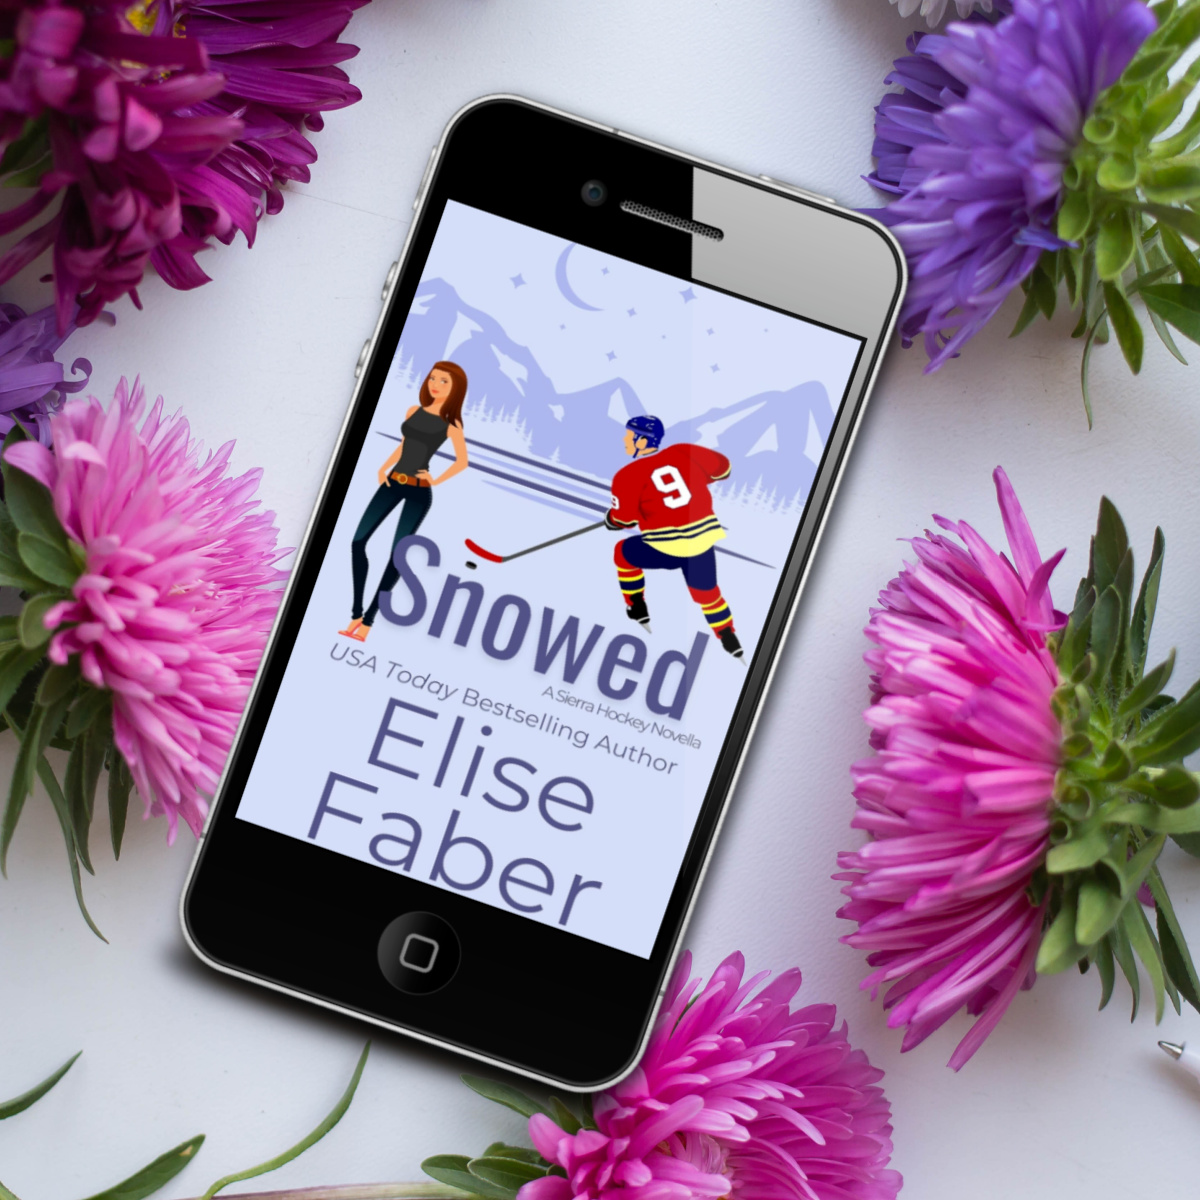 Snowed by Elise Faber is available now!

geni.us/snowed
Available on all platforms!

#contemporaryromance #romancenovel #steamyromance #spicyromance #RomanceBook #Bookstagram #books #bookblog #BookNerd @ElleWoodsPR  #1852media